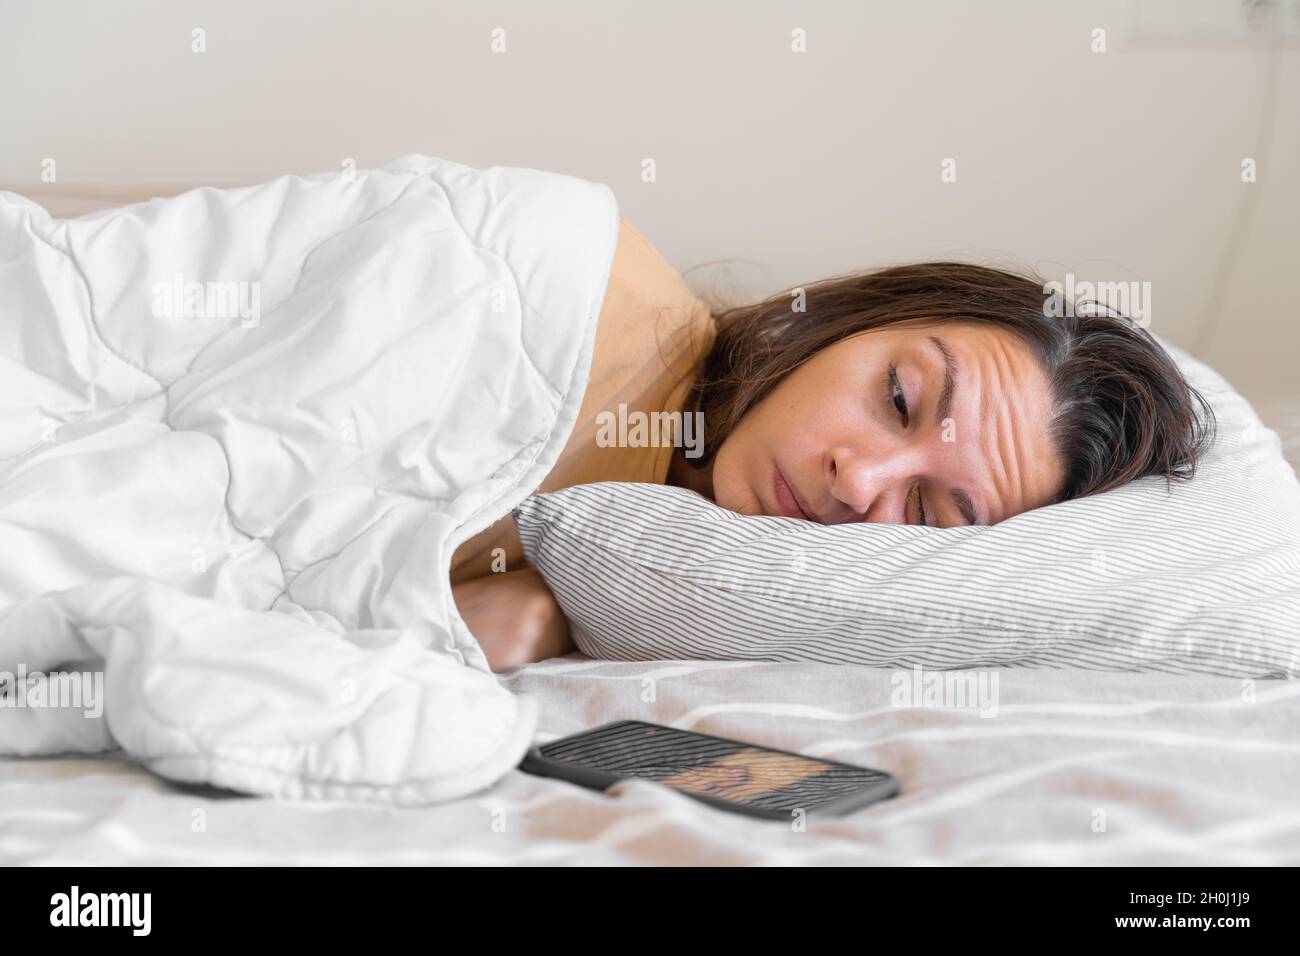 Import sleep. Fall asleep. Бессонница у женщины картинки. Женщина бессонница из за телефона. Sleep important.